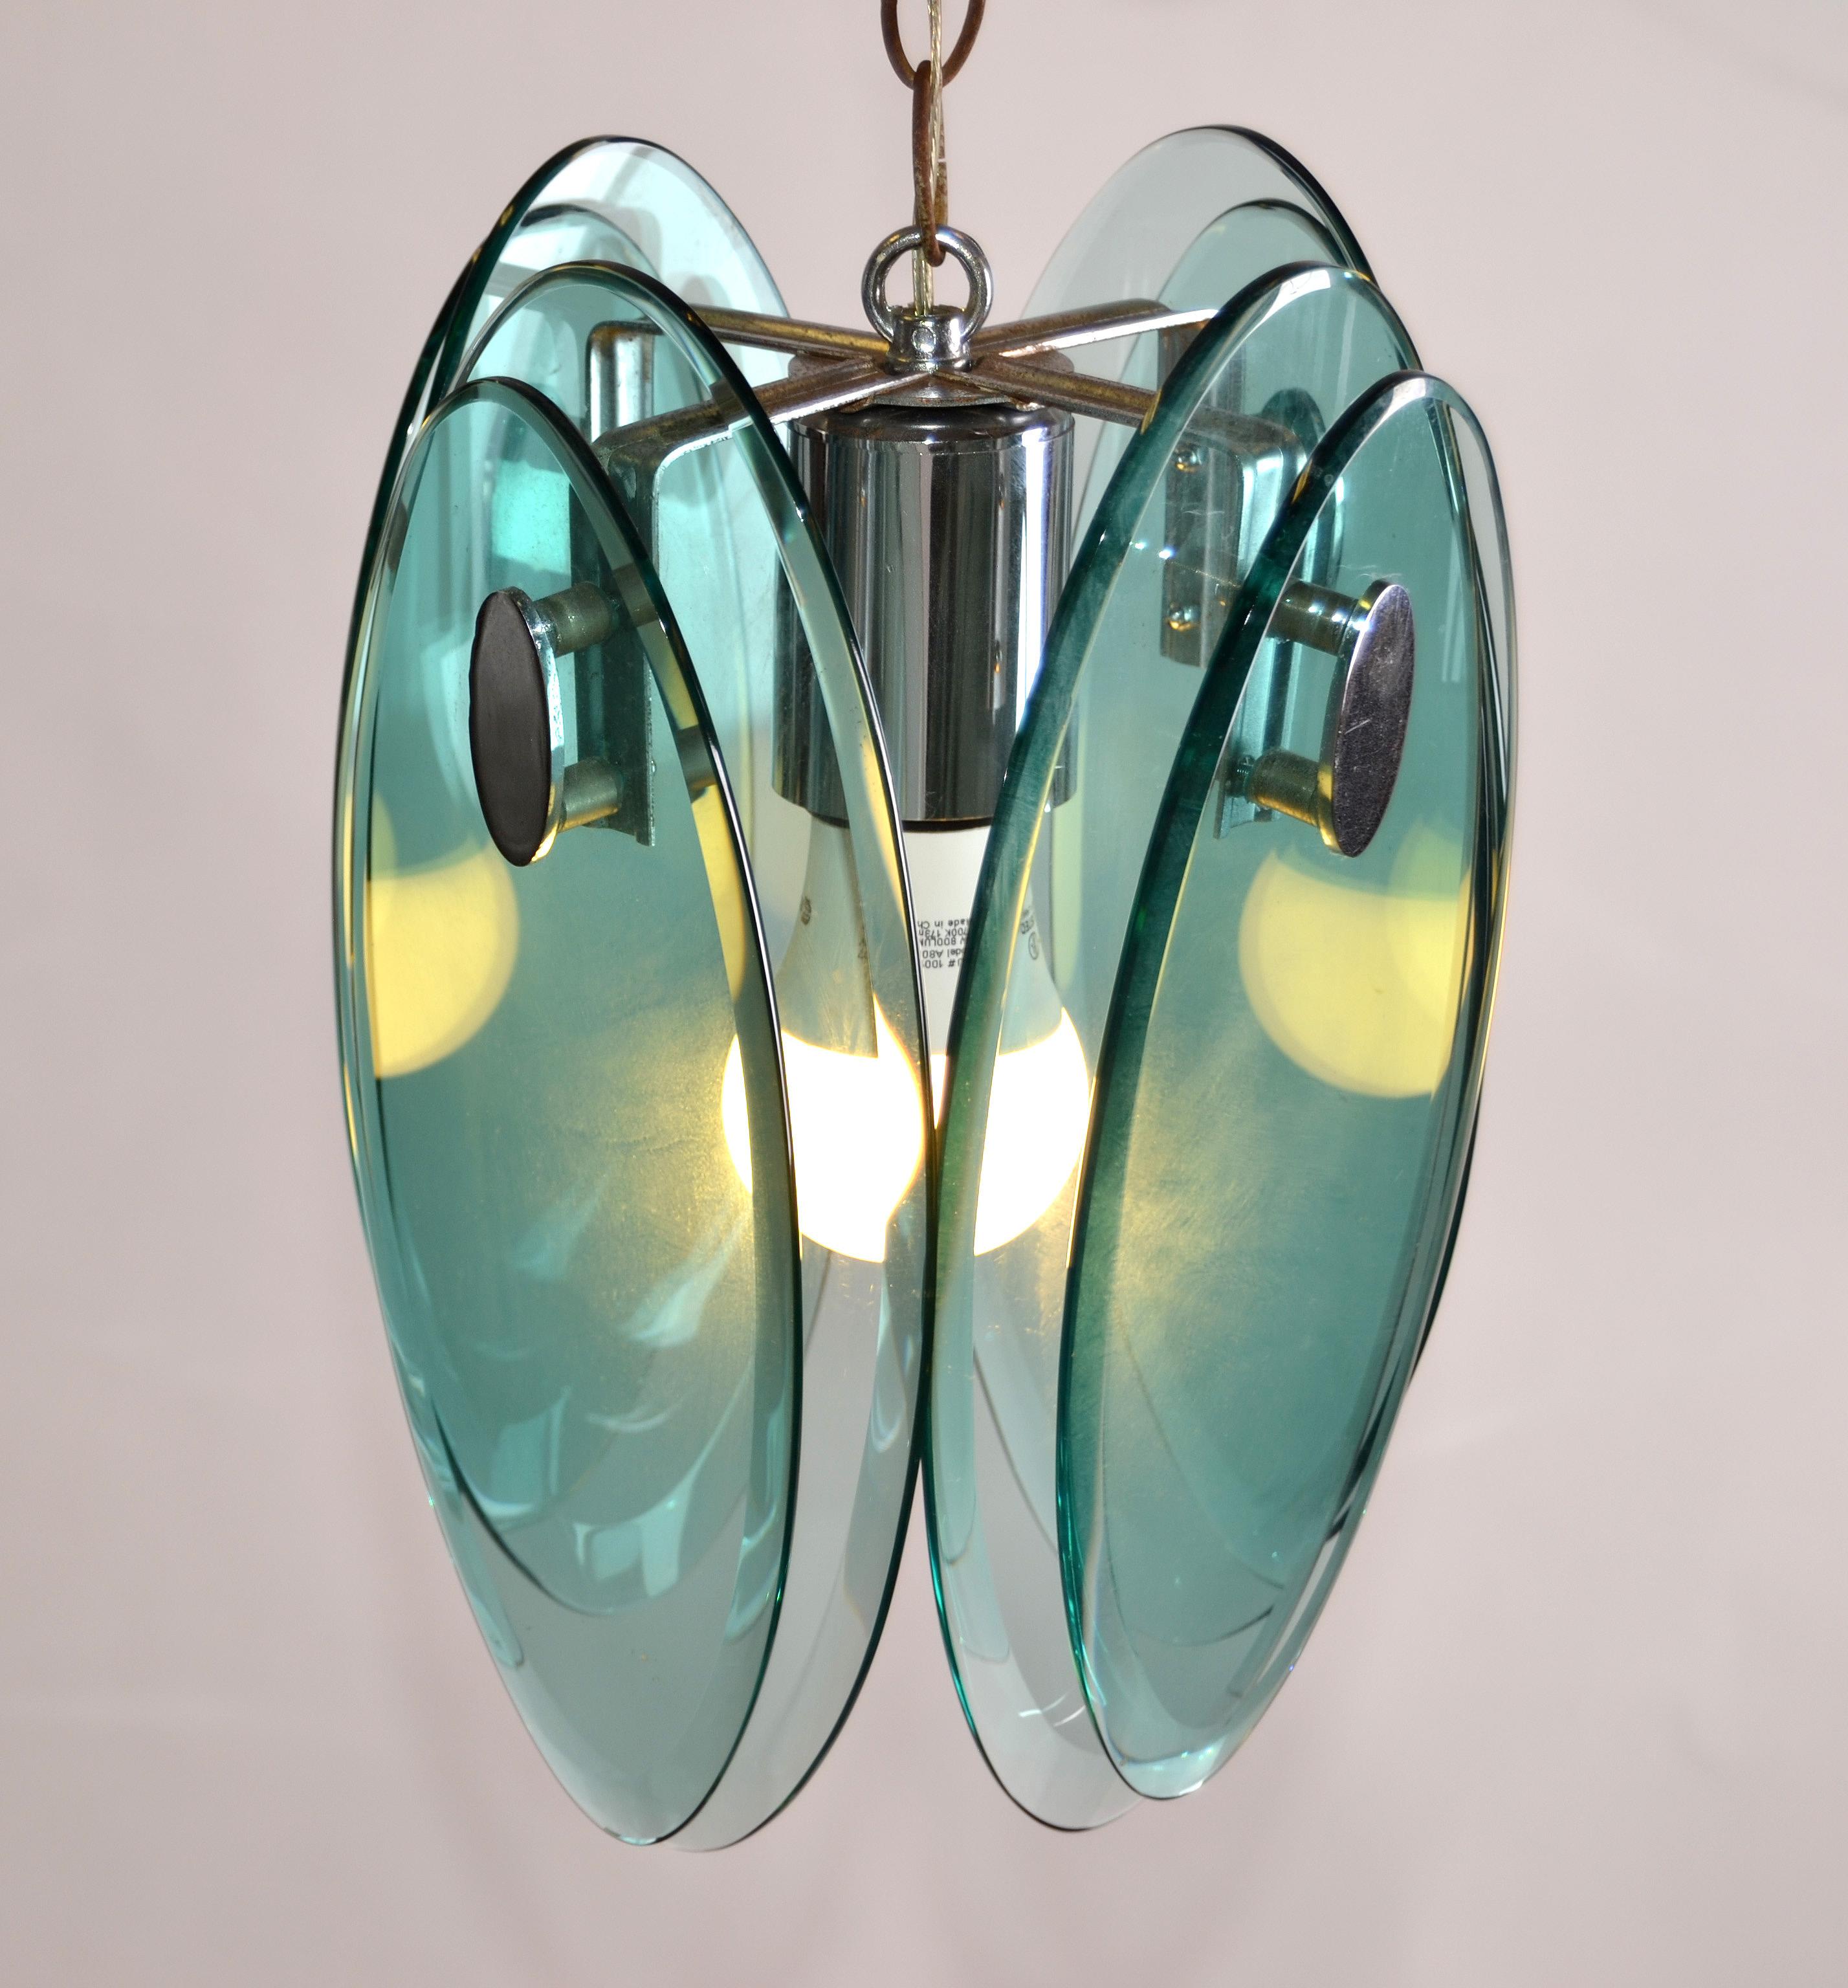 Italian Fontana Arte Mid-Century Modern Beveled Glass and Chrome Pendant Light Fixture For Sale